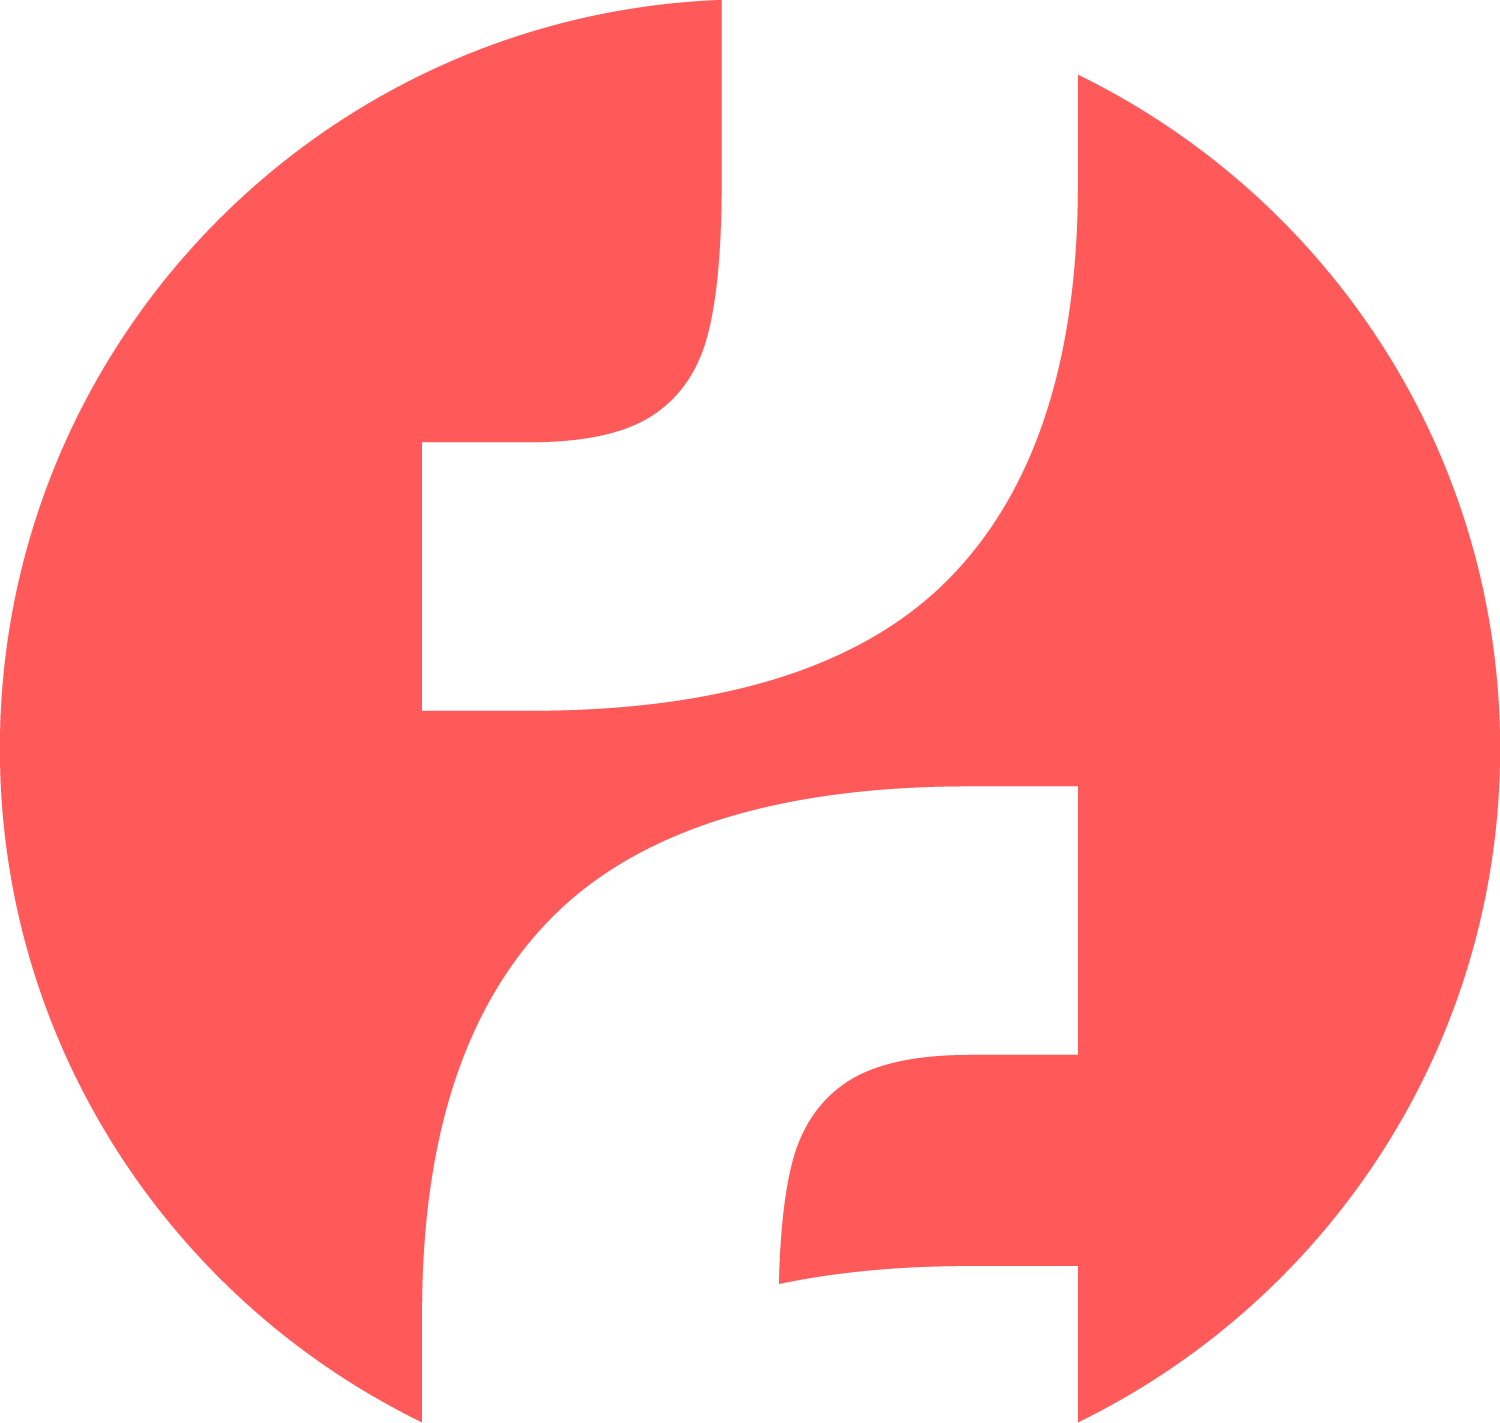 jobformazione-logo-symbol-red